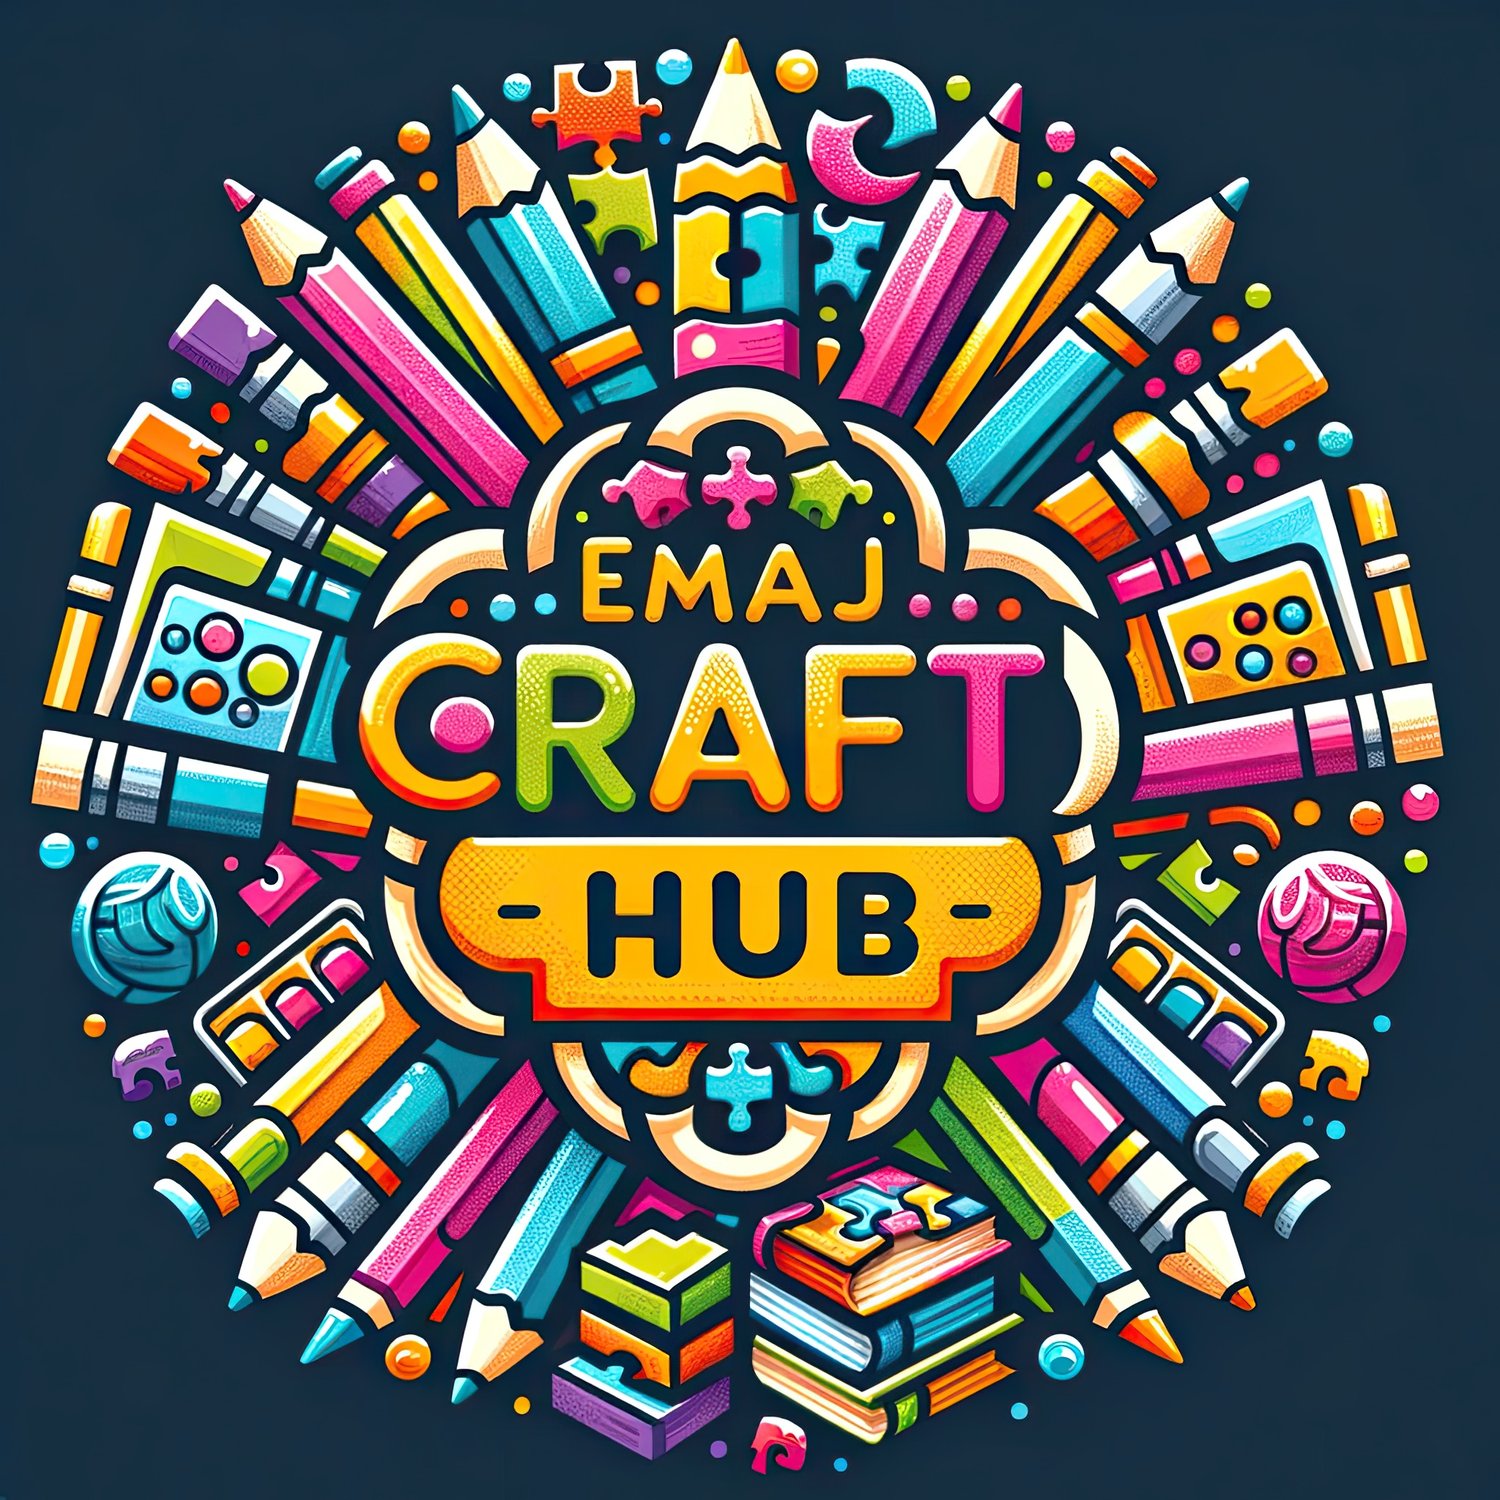 EMAJ Crafts Hub